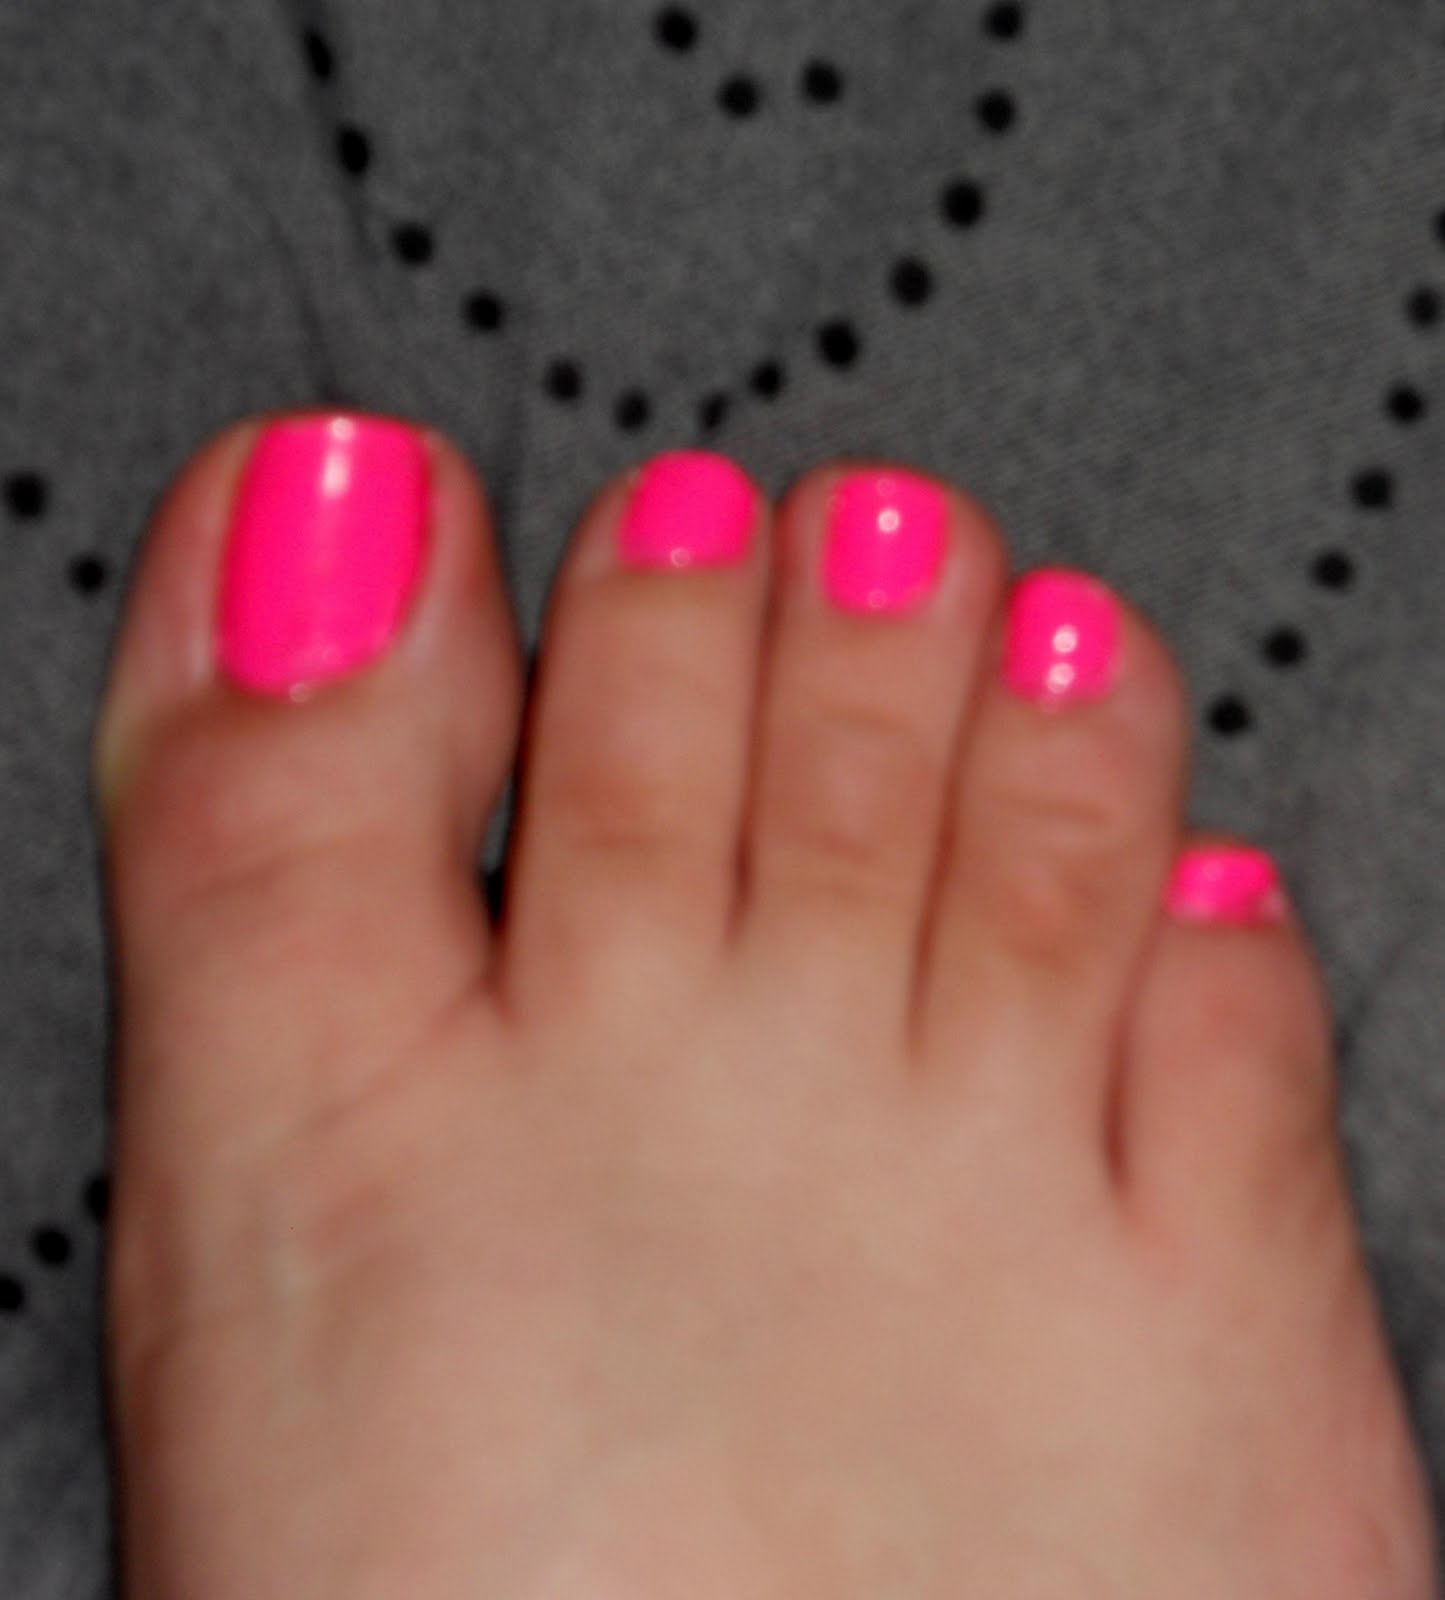 Pretty pink toe